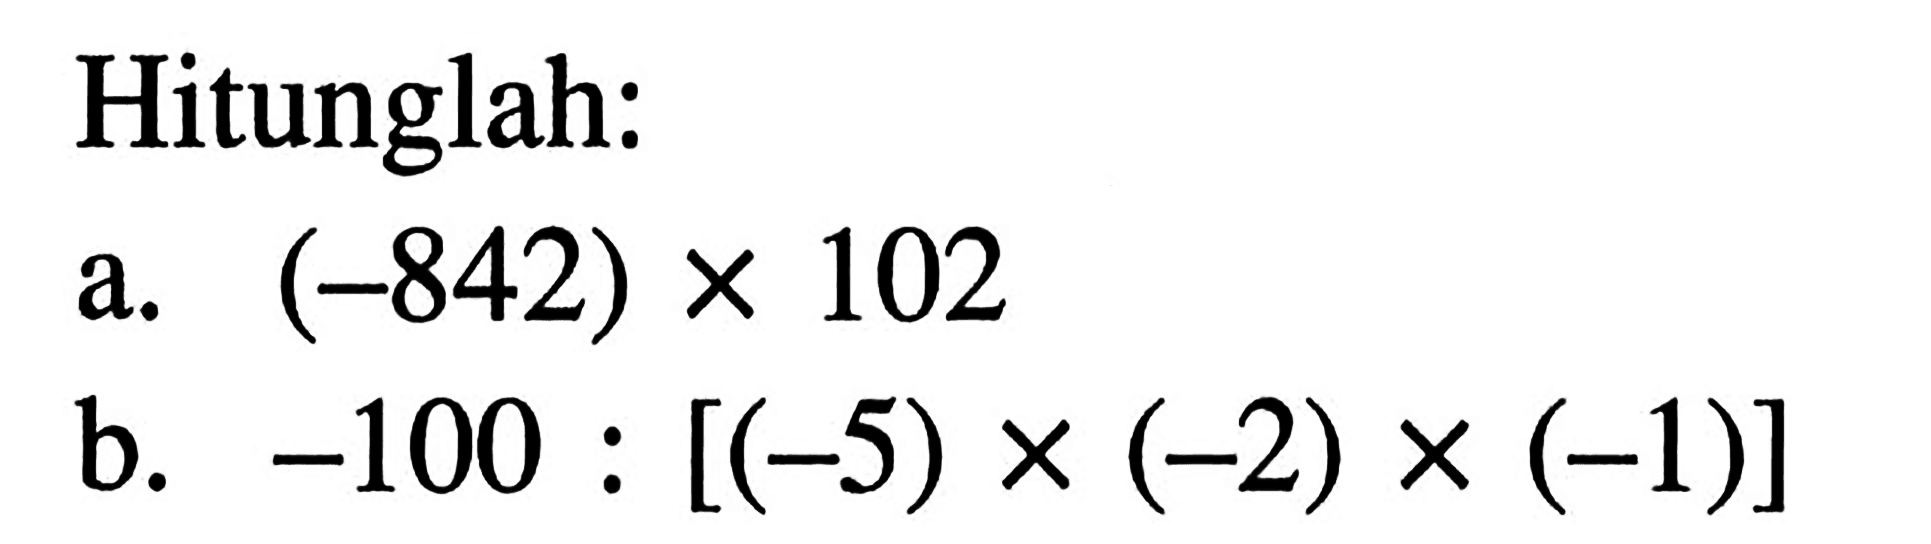 Hitunglah: a.(-842) X 102 b. -100 [(-5) x (-2) x (-1)]